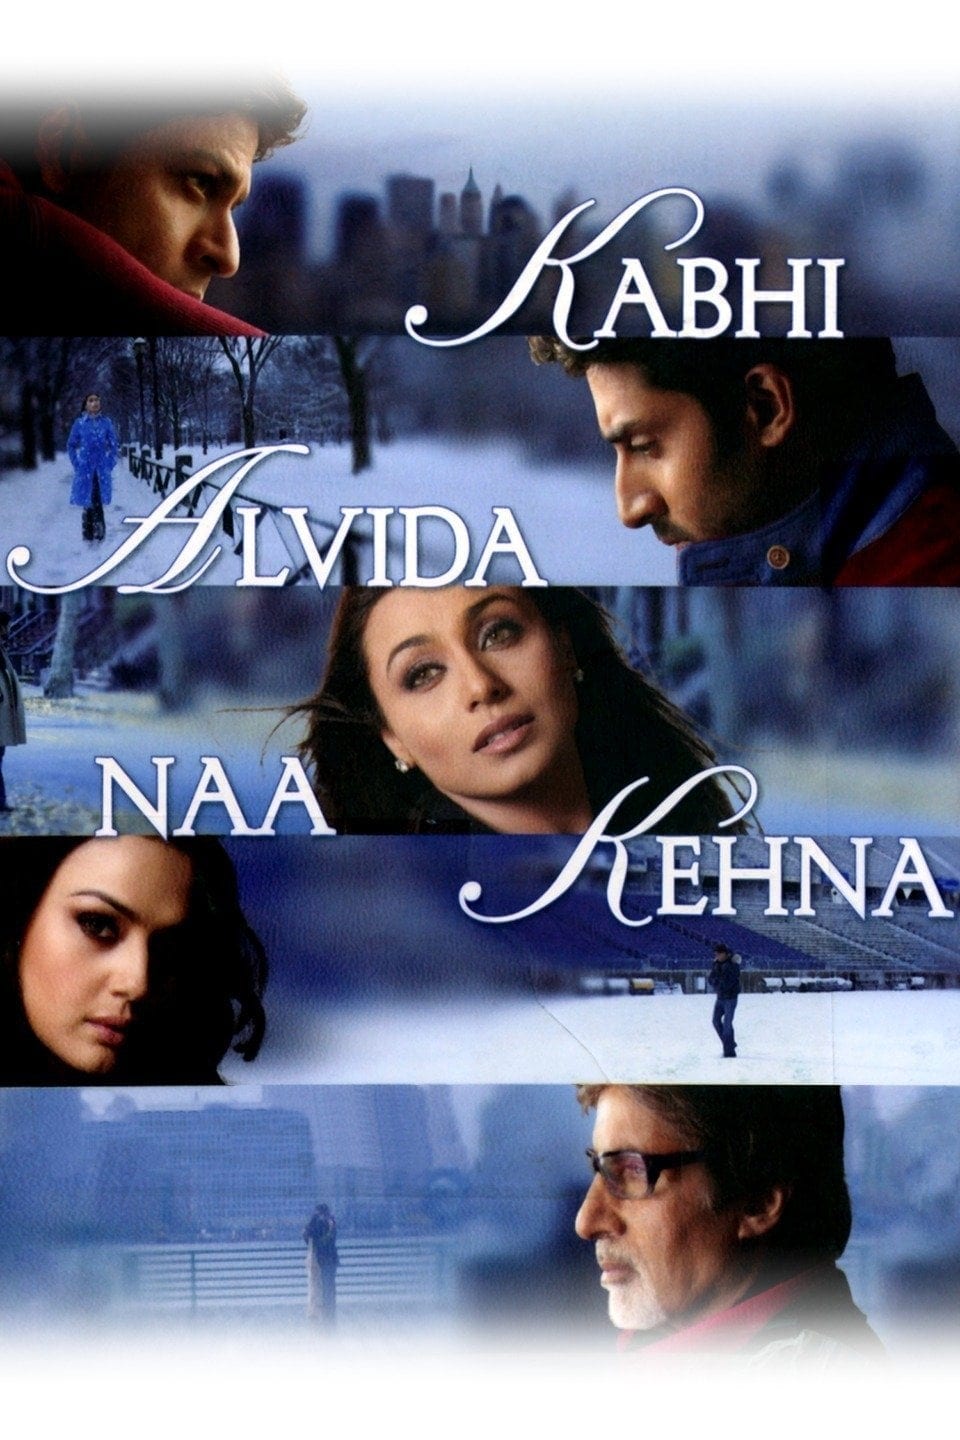 Poster for the movie "Kabhi Alvida Naa Kehna"